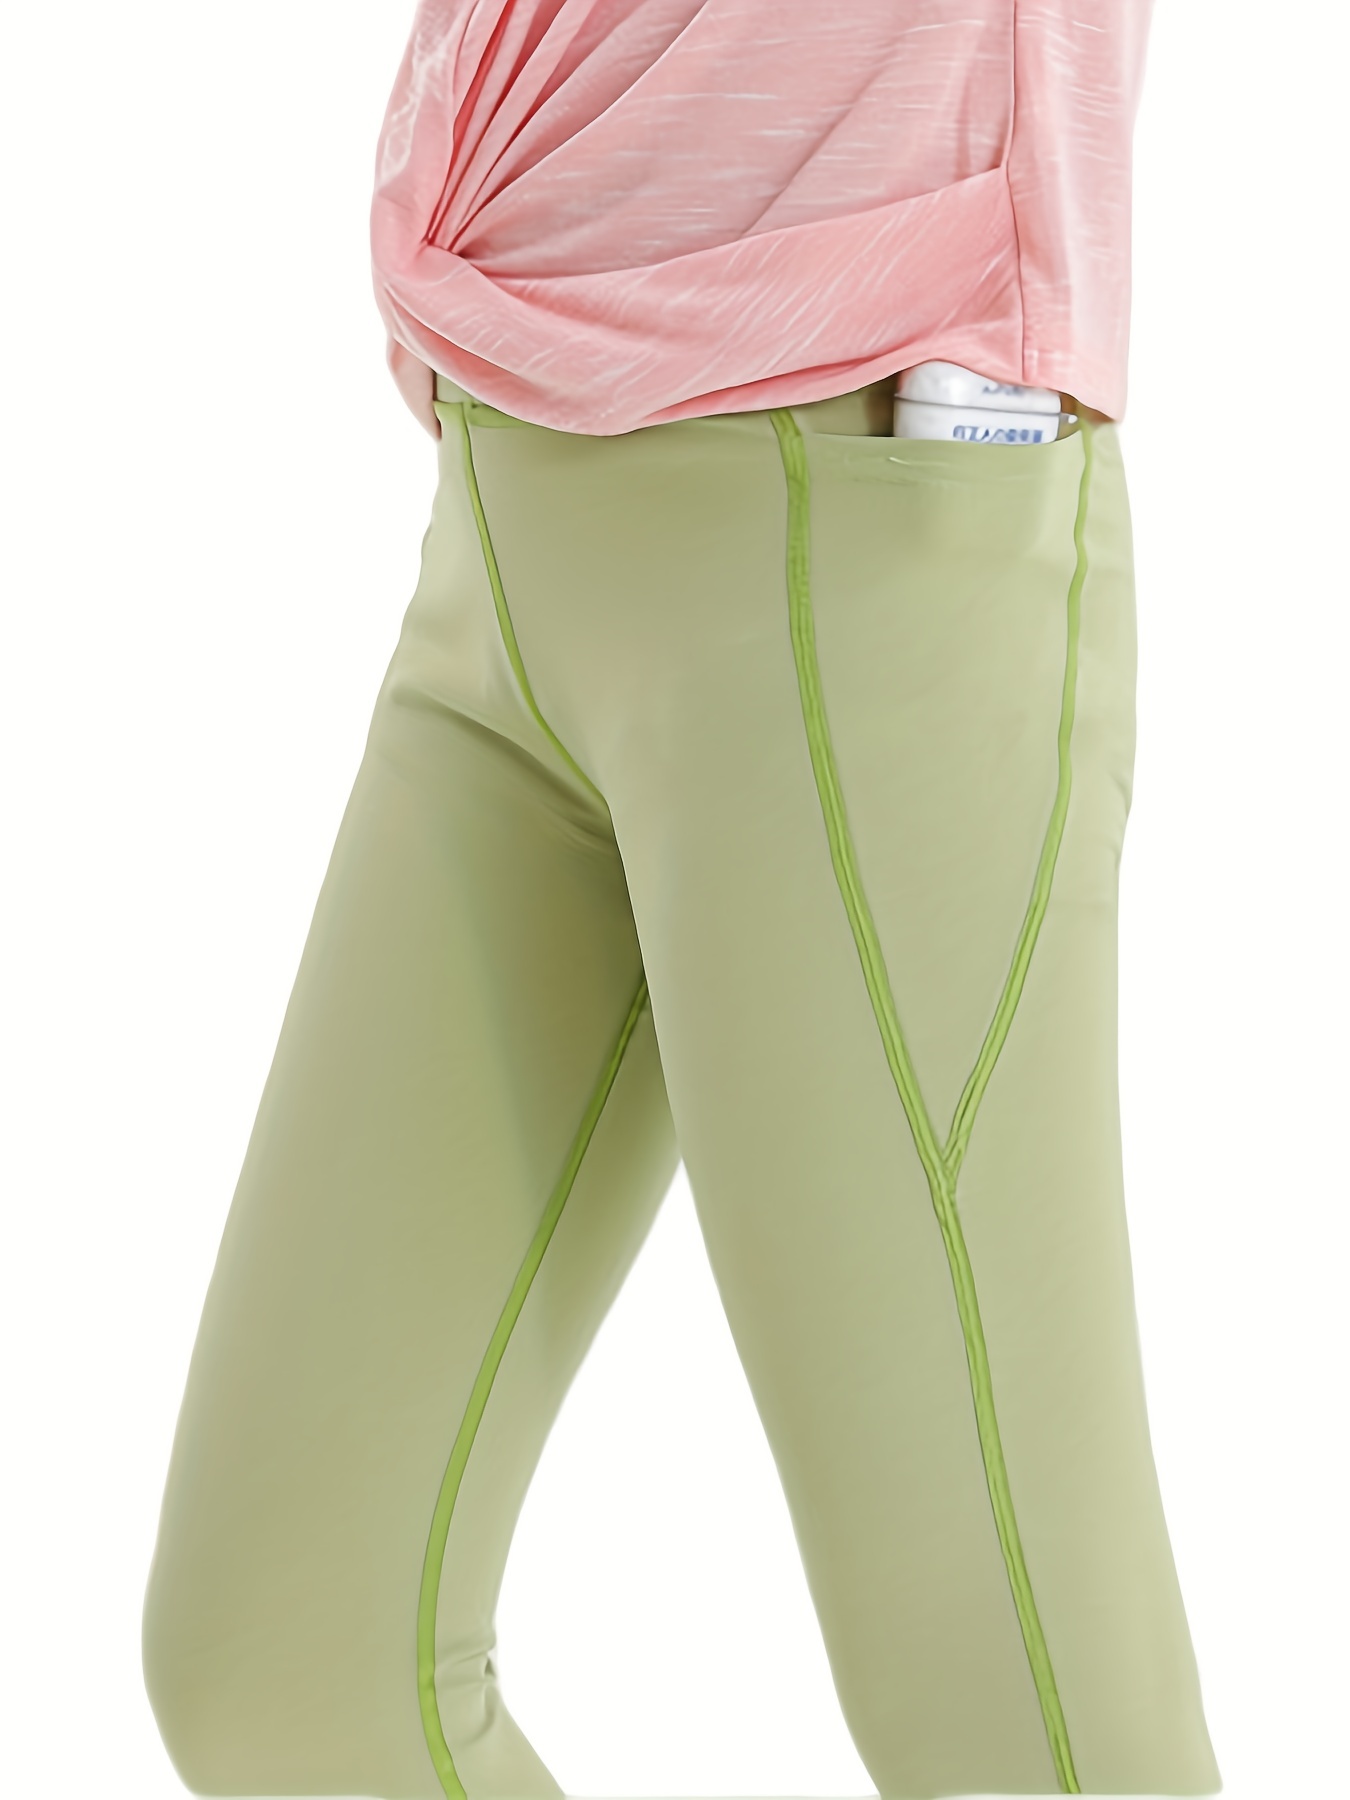 Ladies Yoga Pants Fitness Clothes Running Elastic Yoga Leggings